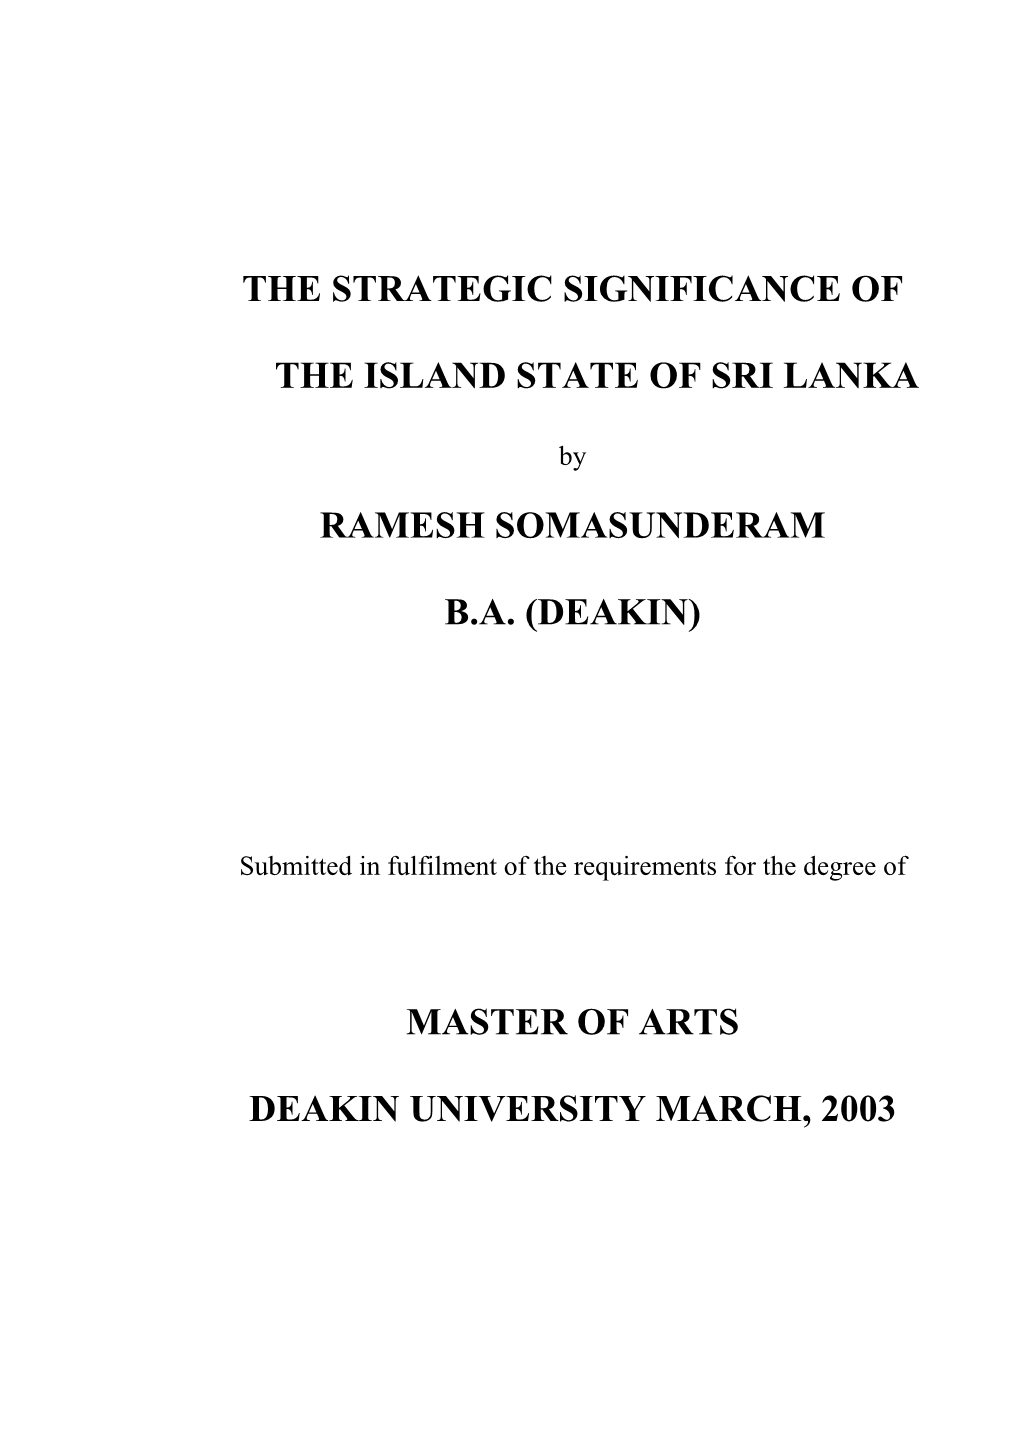 The Strategic Significance of the Island State of Sri Lanka